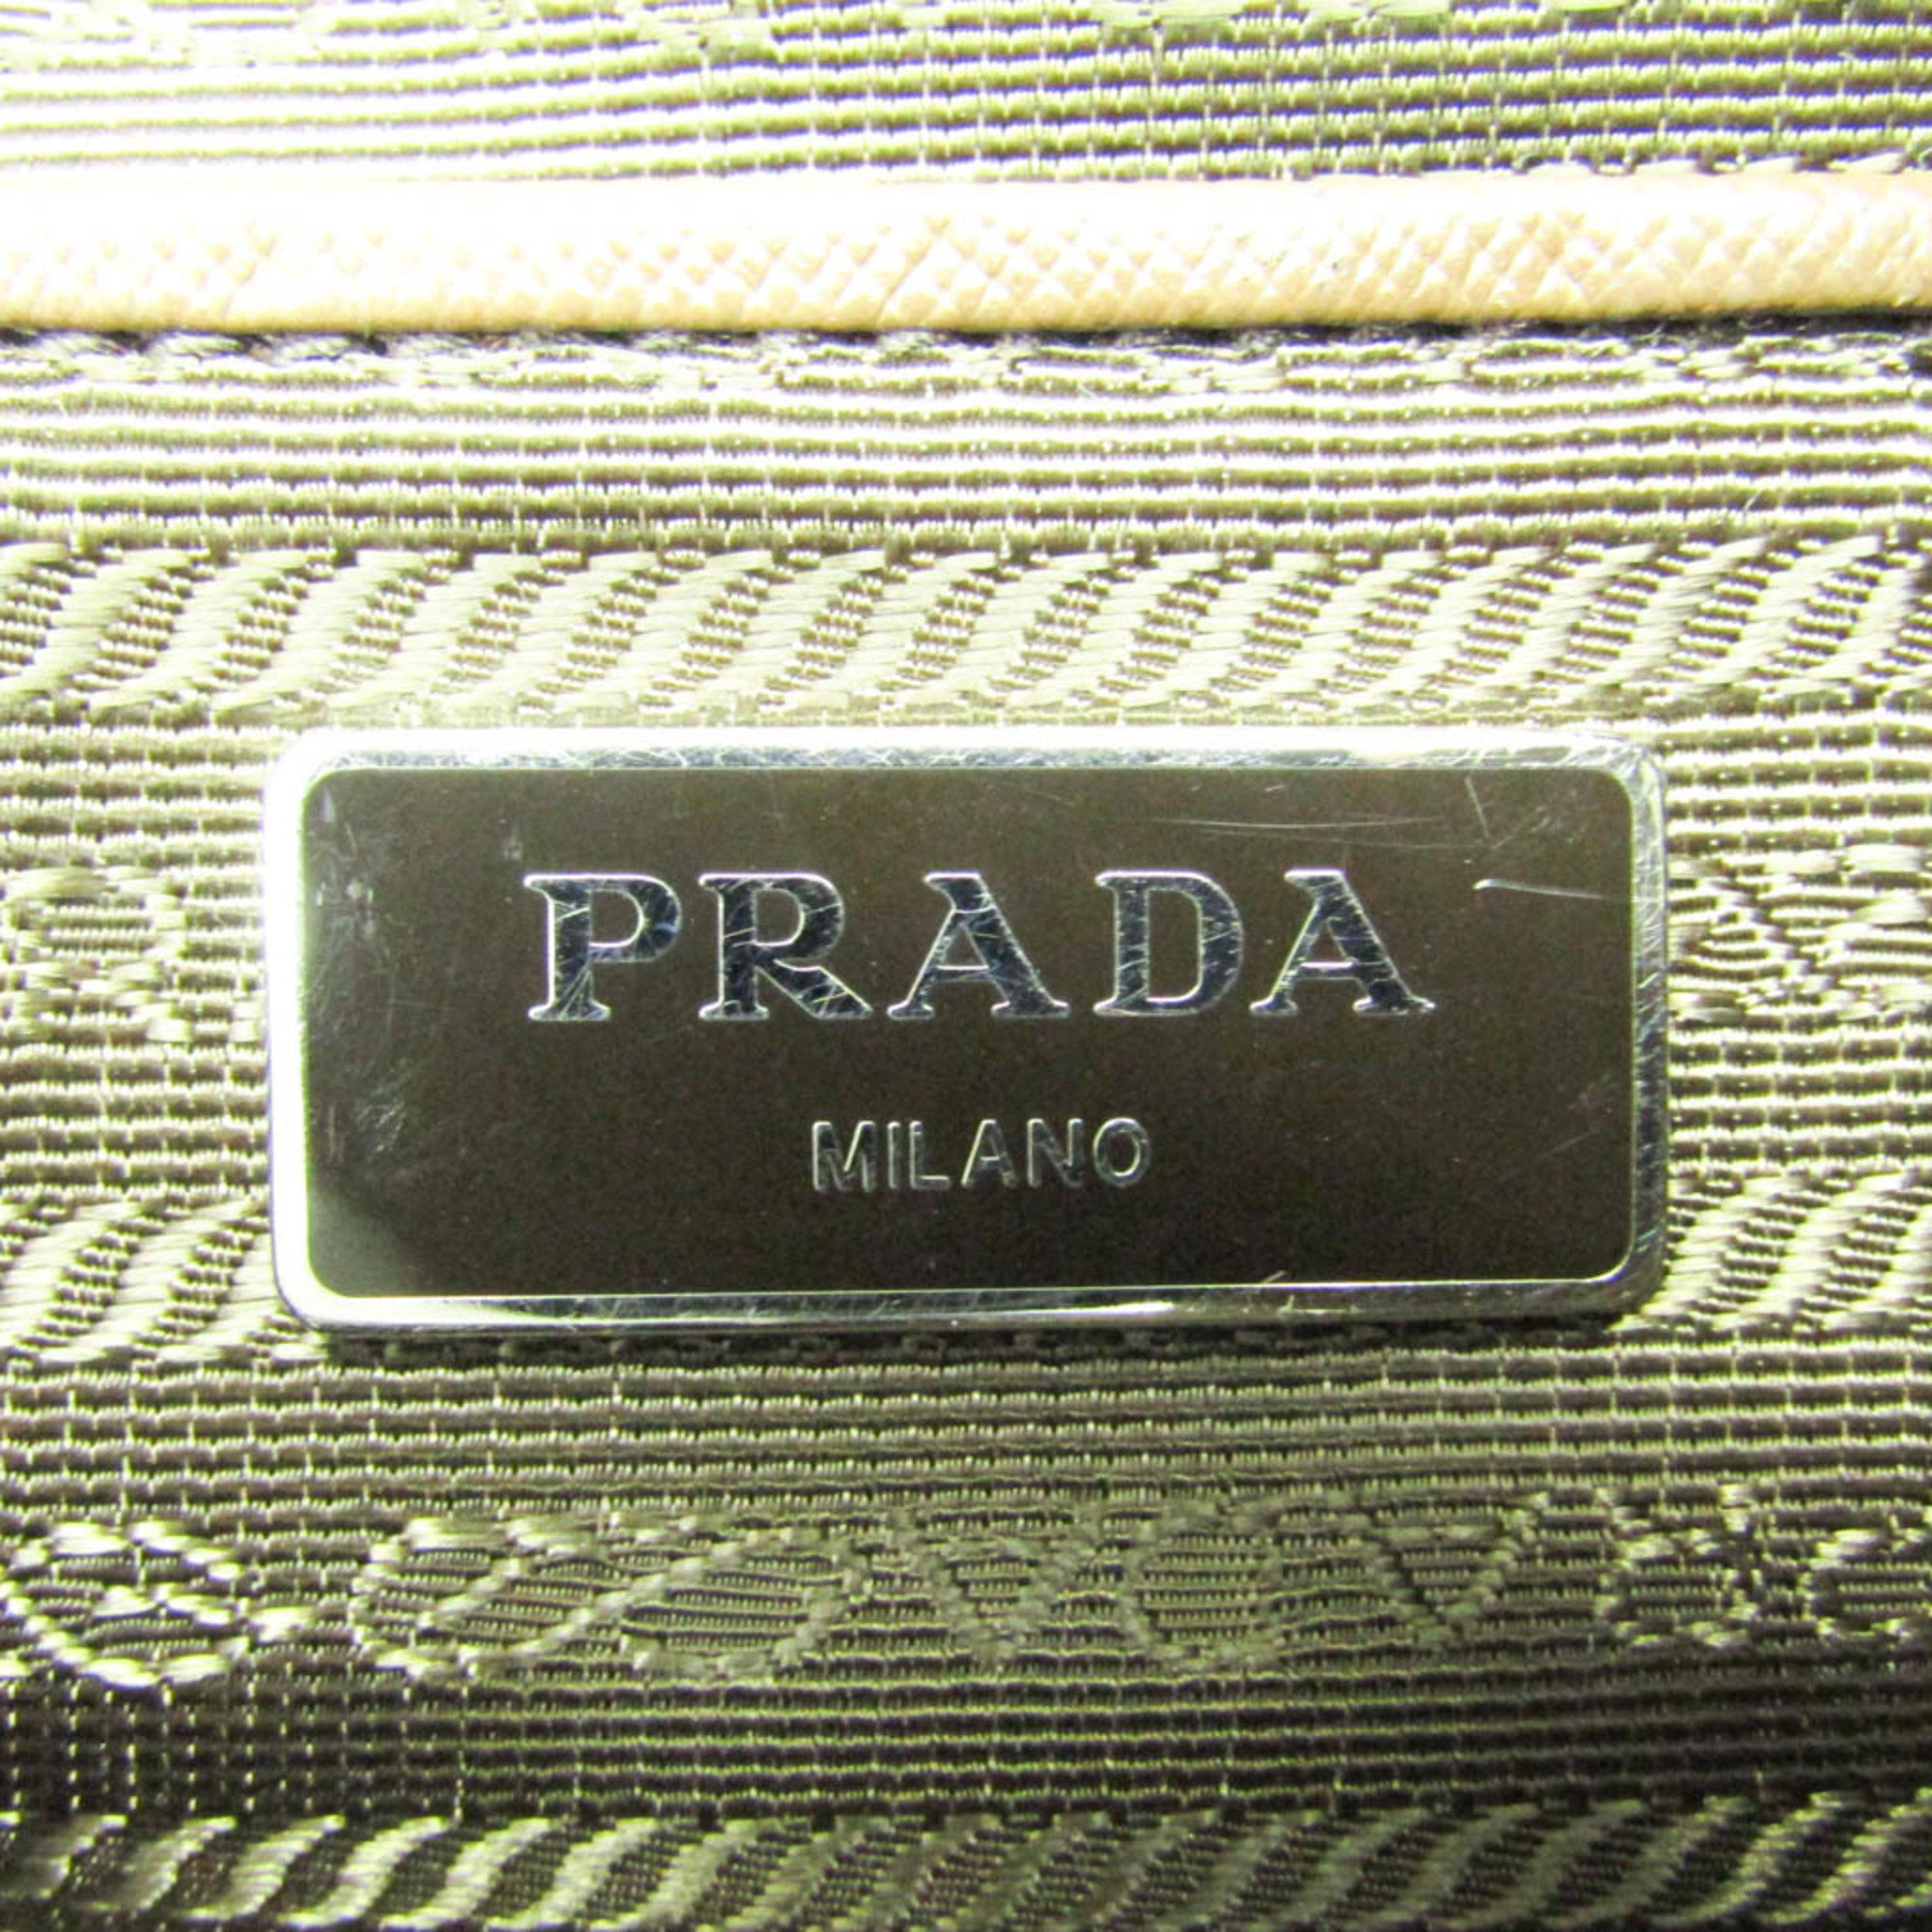 Prada Women's Nylon,Leather Backpack Khaki Brown